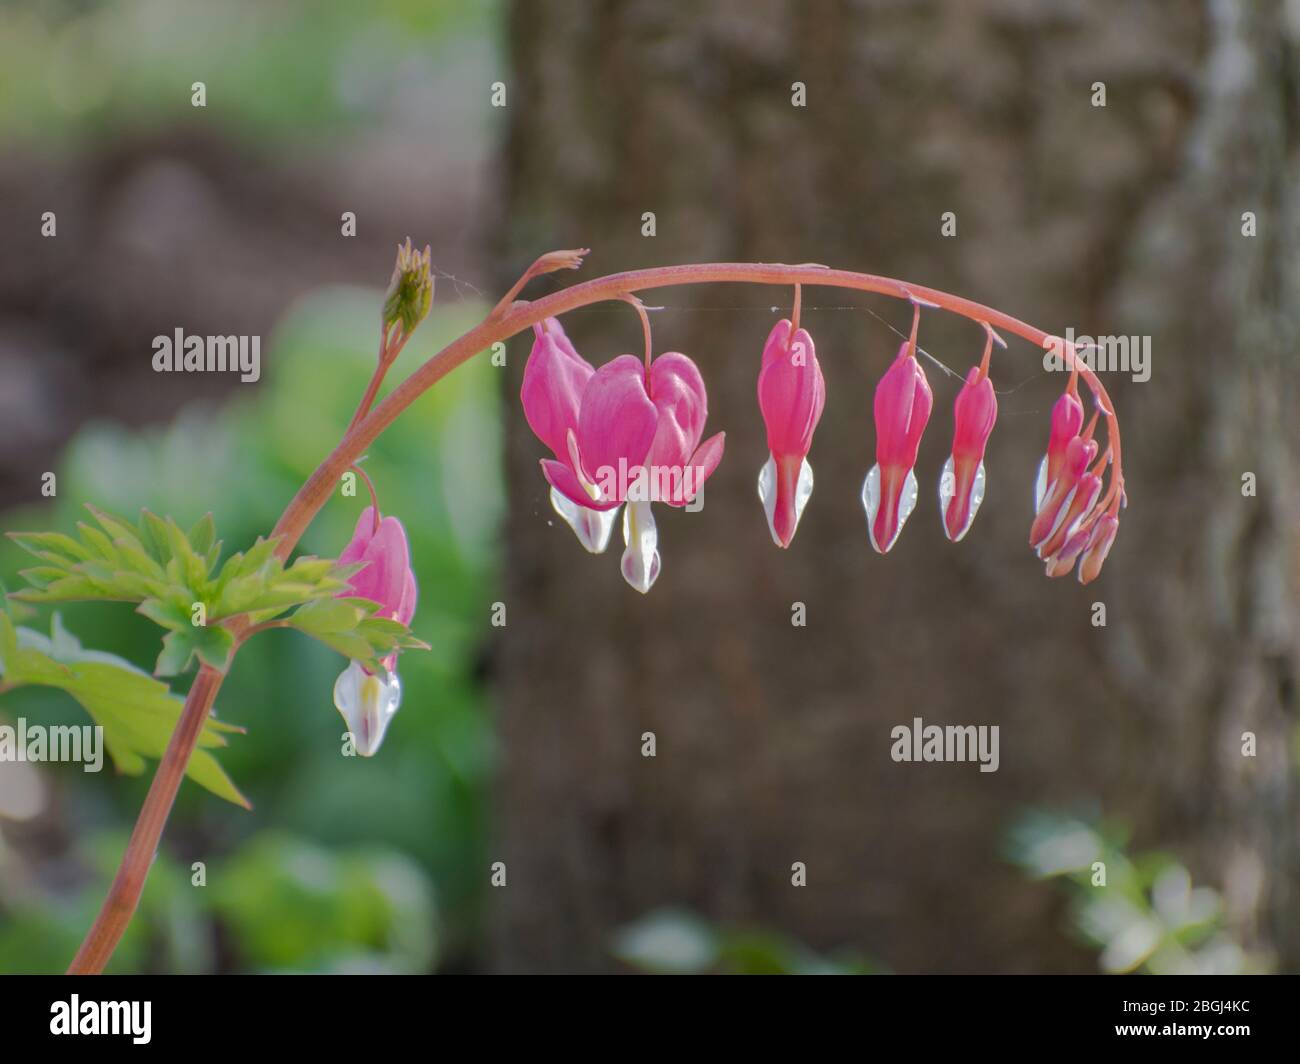 Bleeding-heart, Lamprocapnos spectabilis, lyre-flower, Lady-in-a-bath Stock Photo